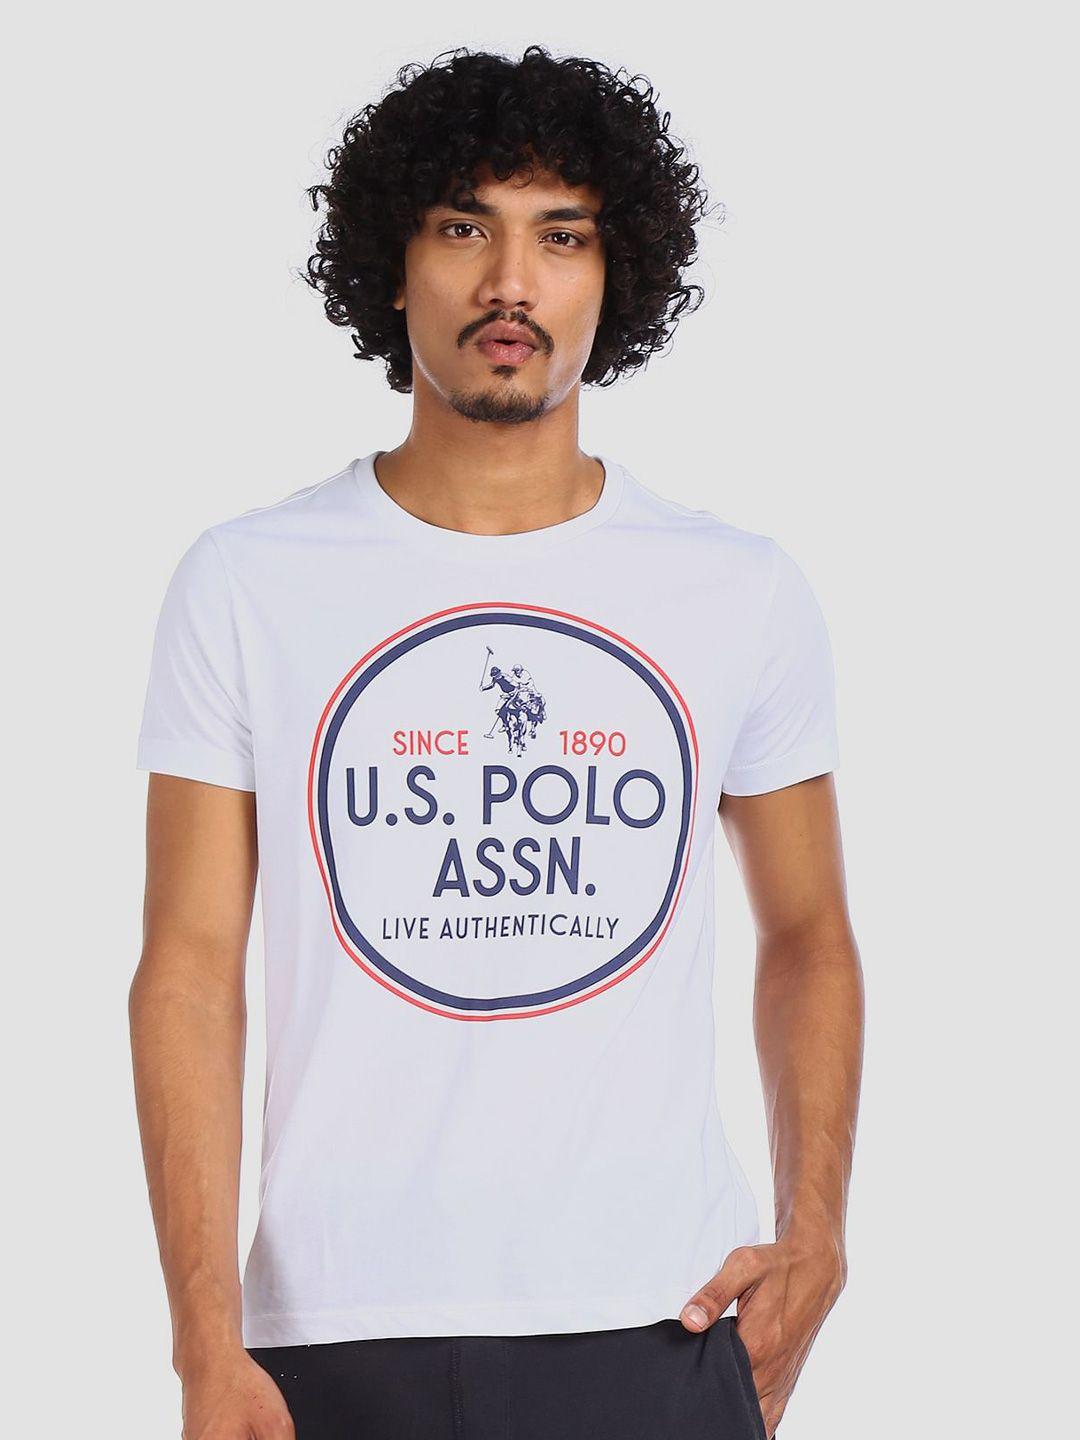 u.s. polo assn. denim co. men white printed slim fit round neck pure cotton t-shirt